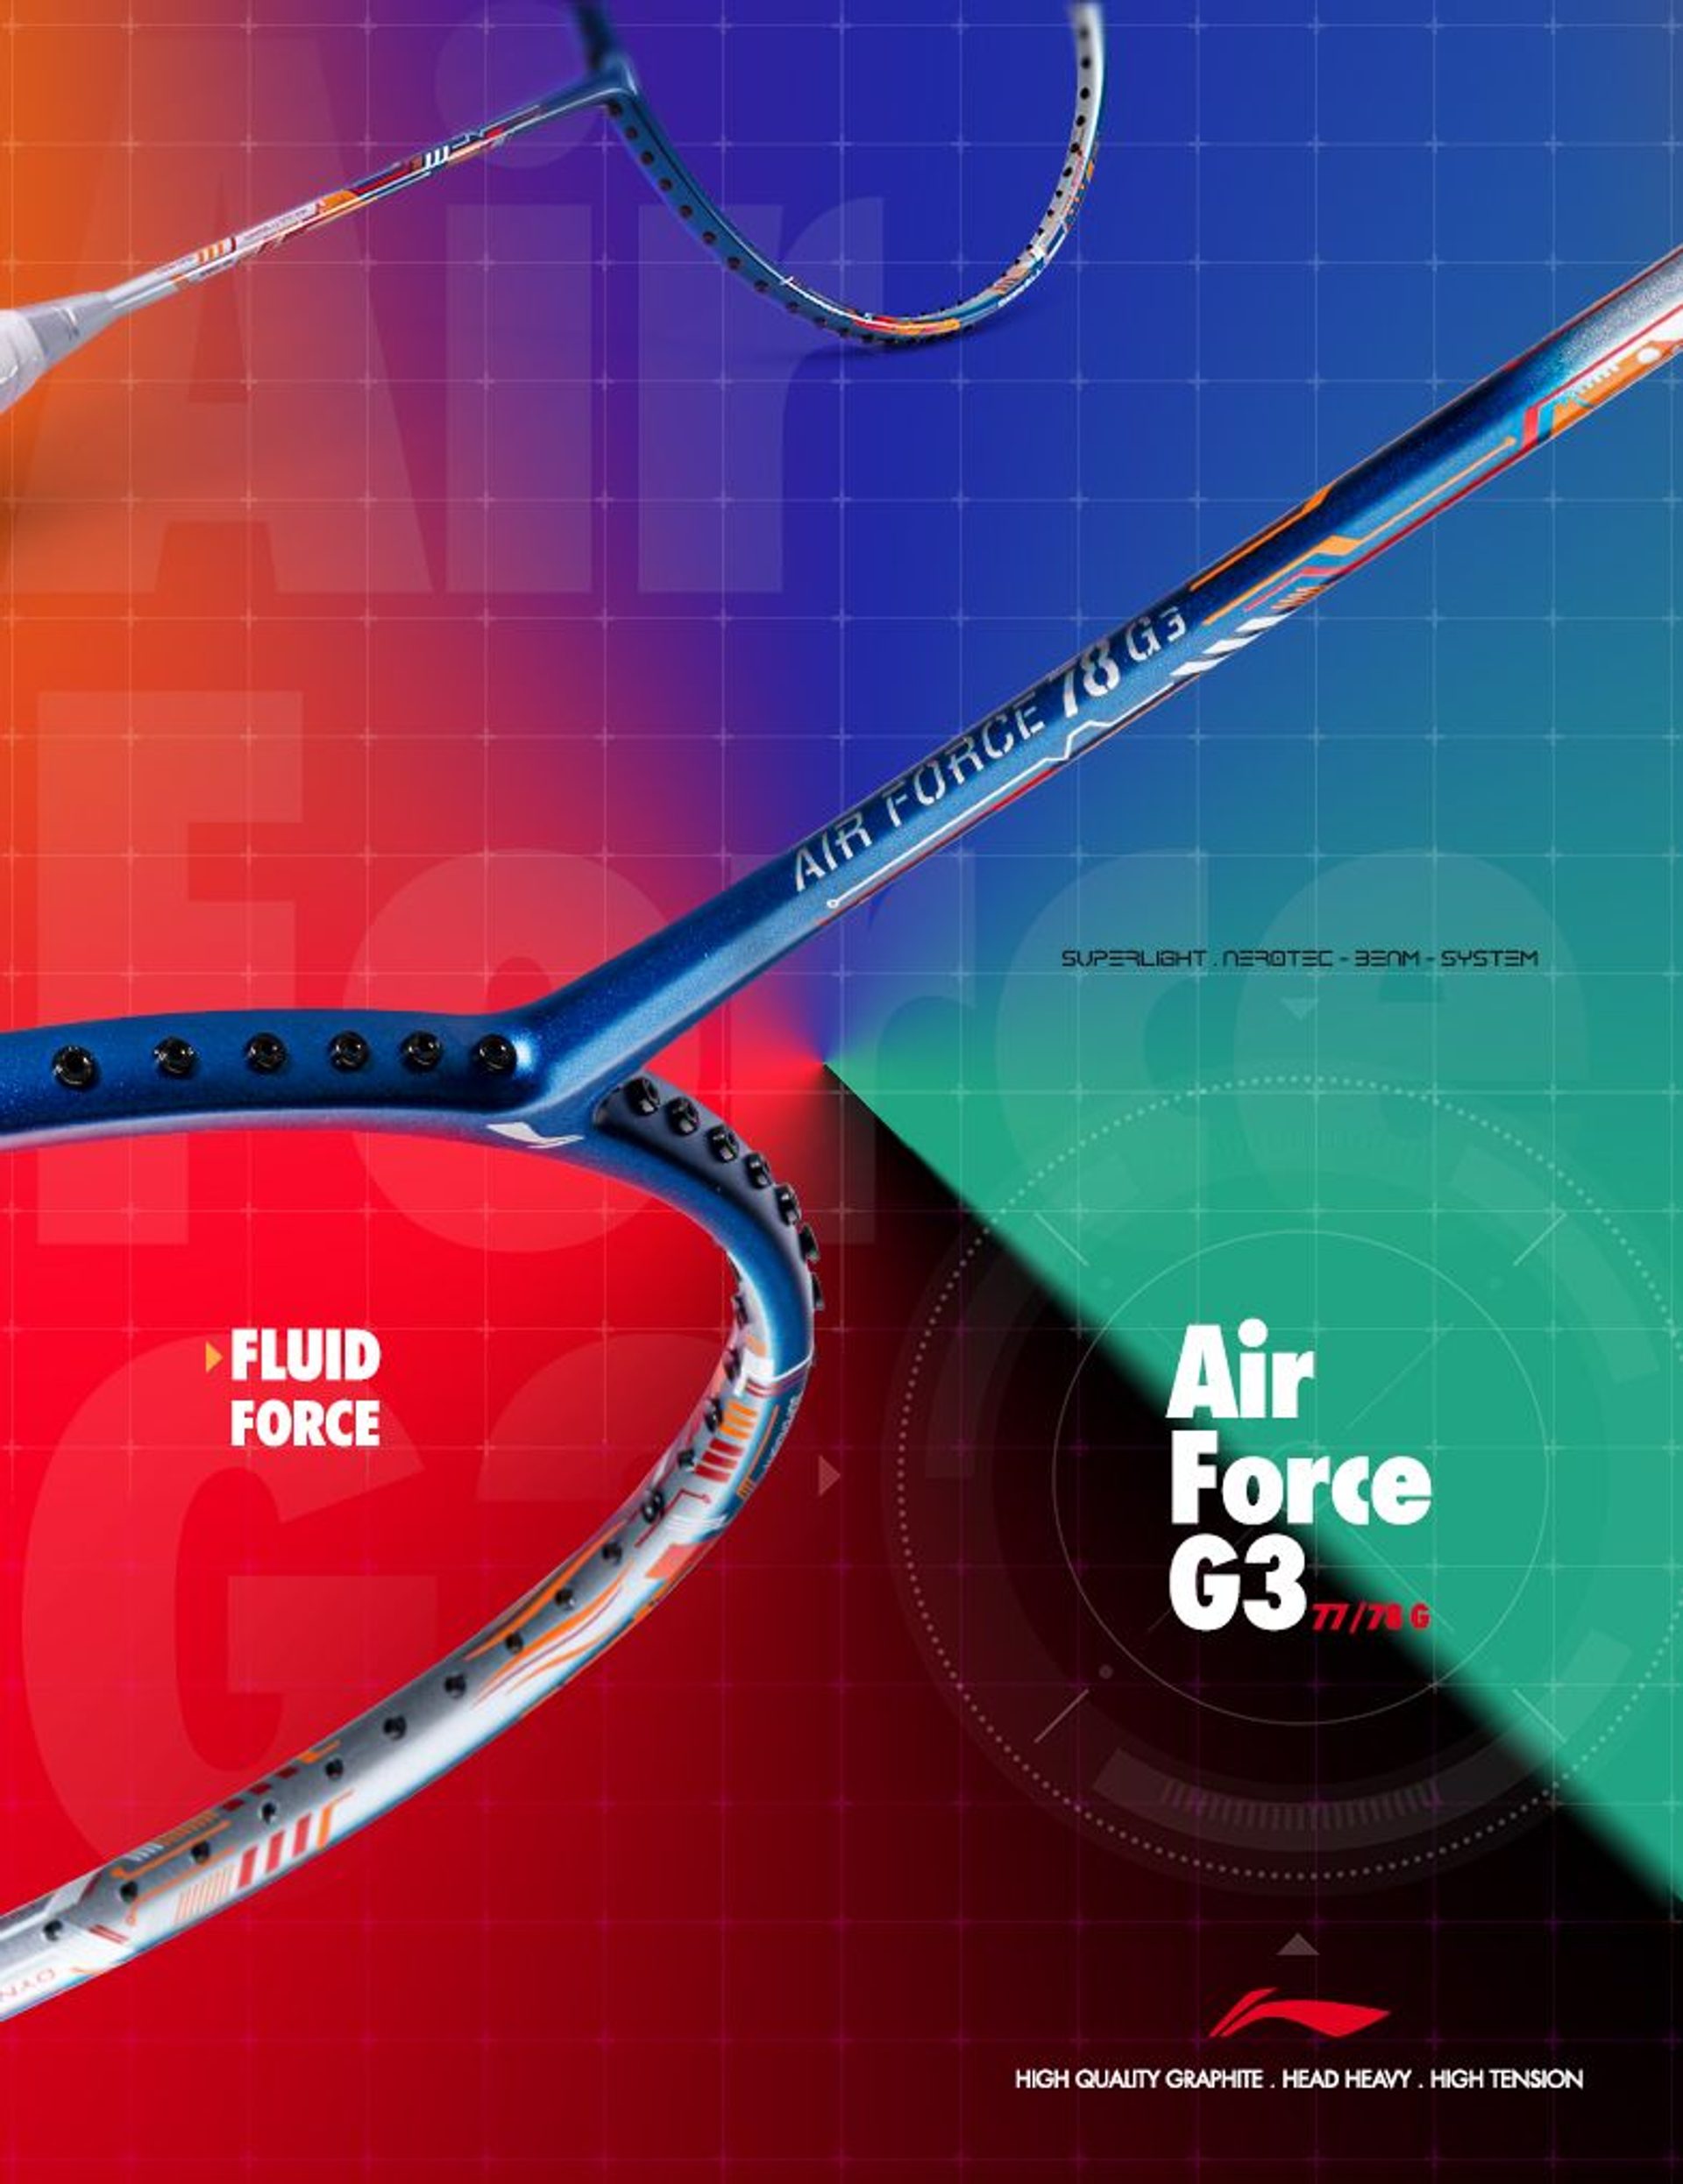 Air Force G3 - Badminton Racket